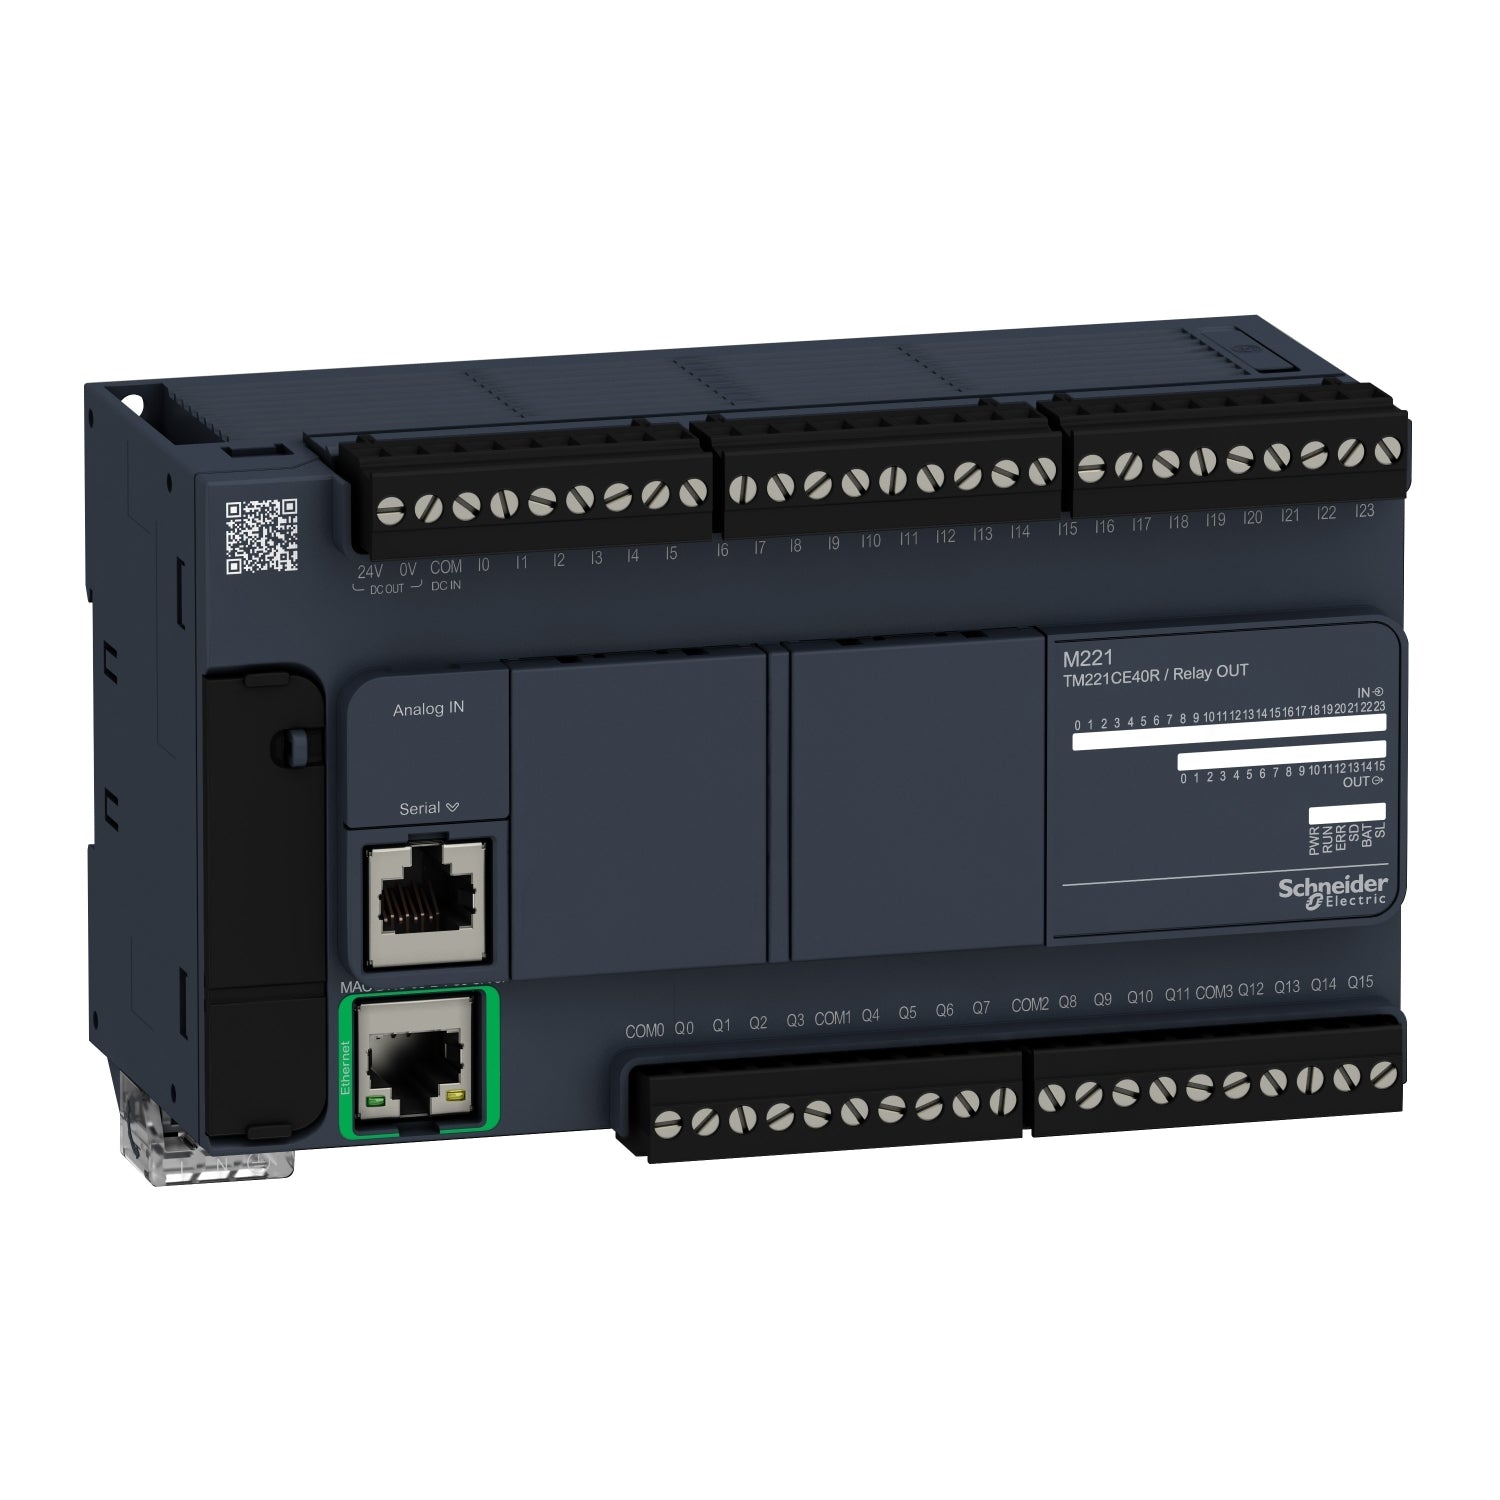 TM221CE40R | Schneider Electric | Logic controller